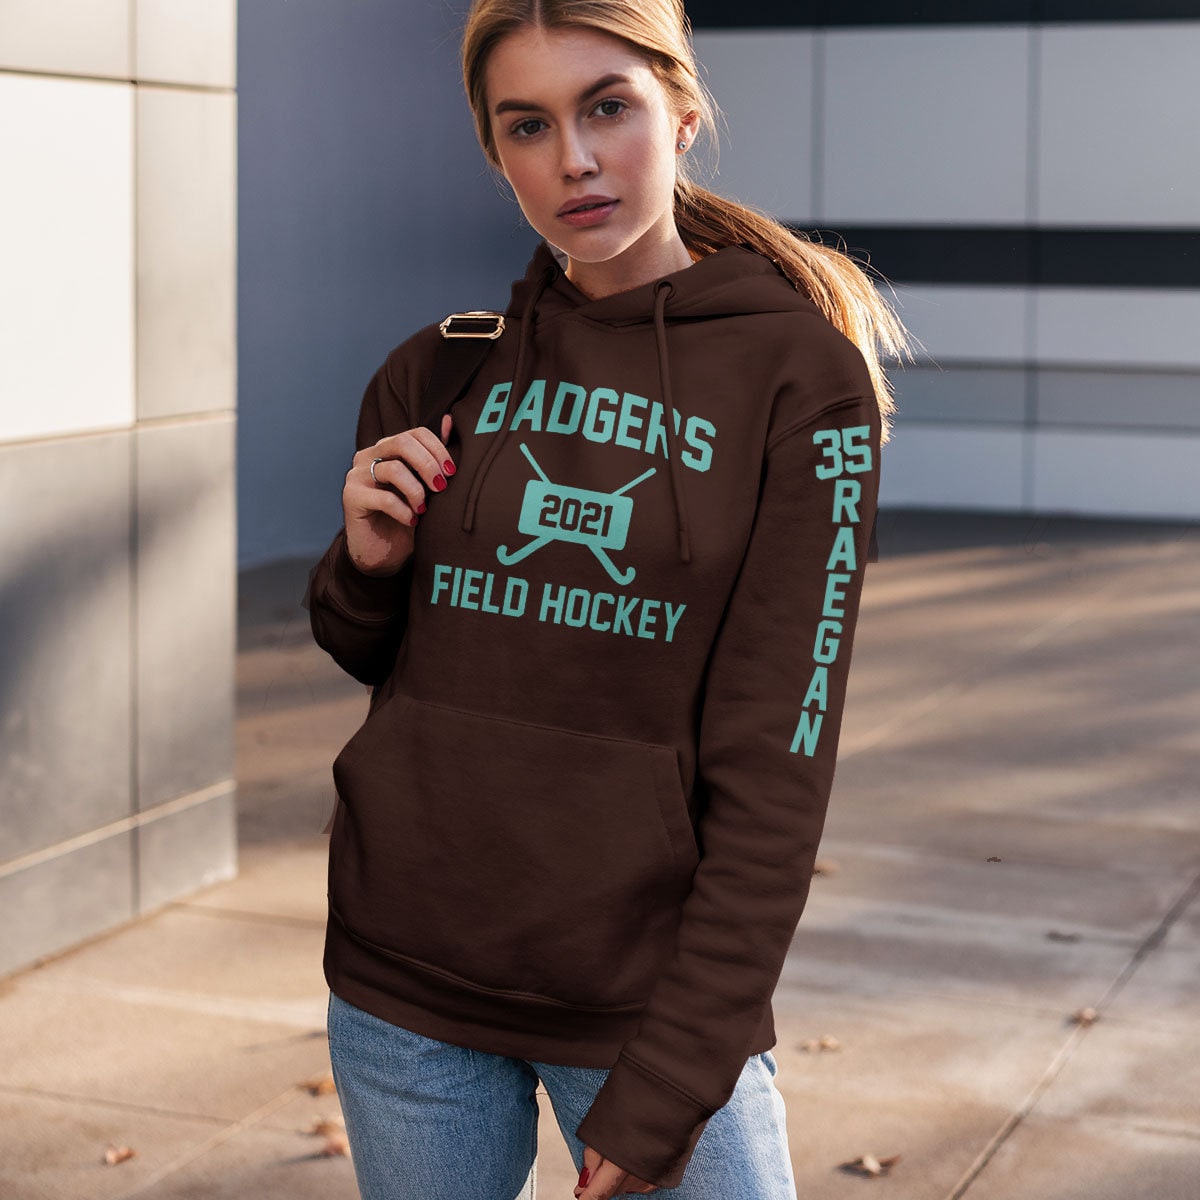 Field Hockey 03 Design Idea - Get Started At ThatShirt!